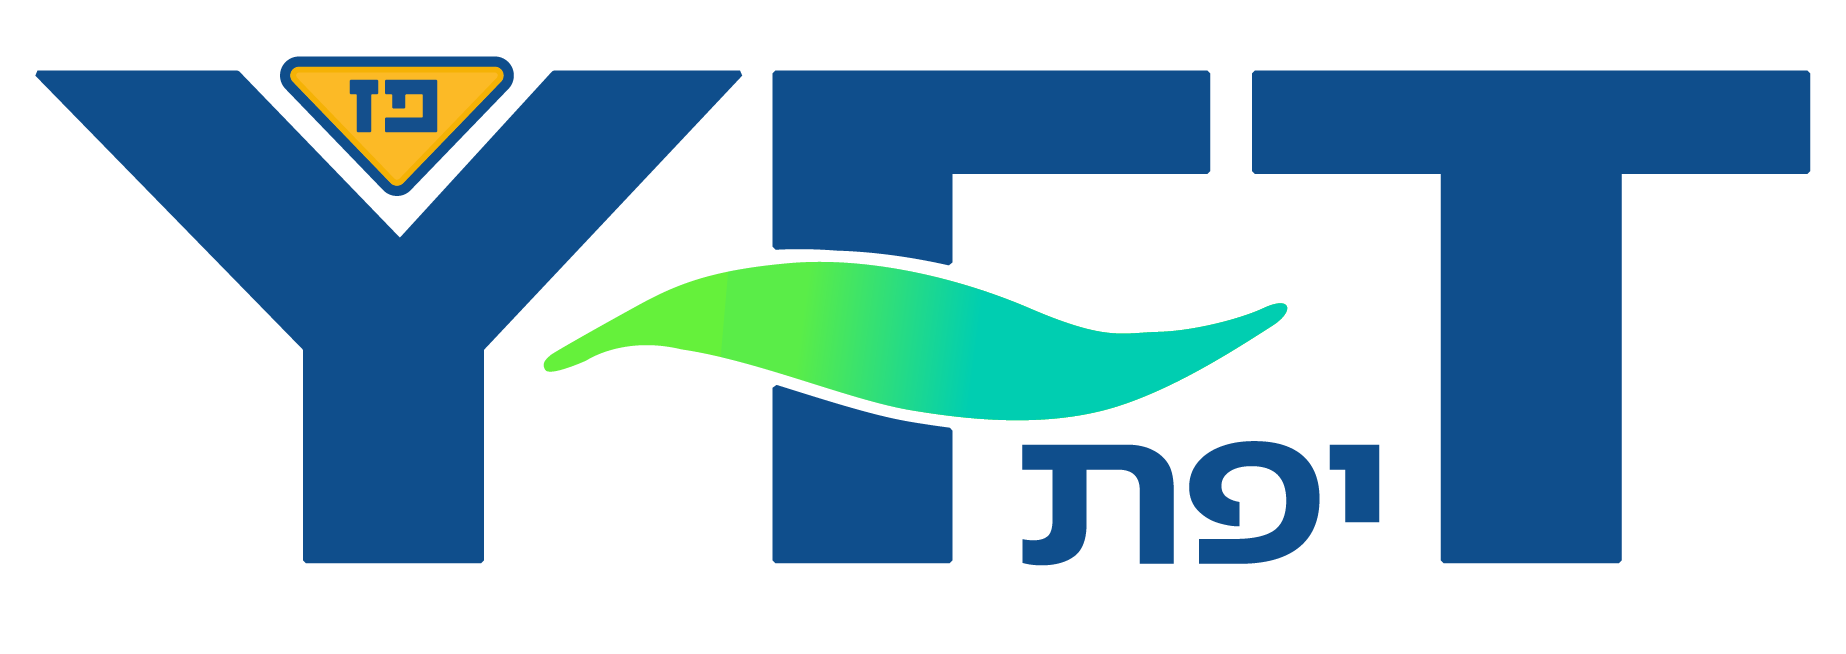 Yft Logo@4x